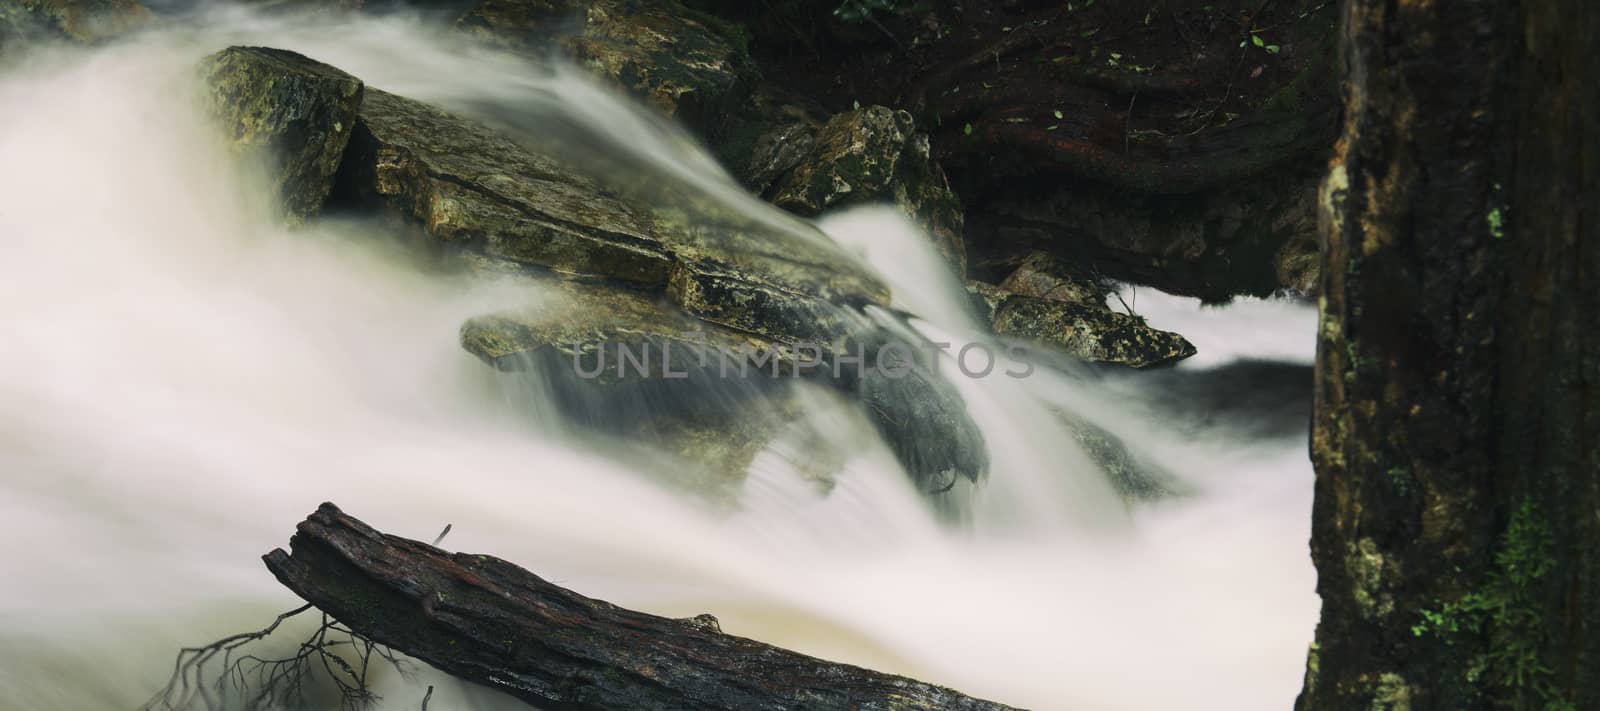 Knyvet Falls in Cradle Mountain by artistrobd